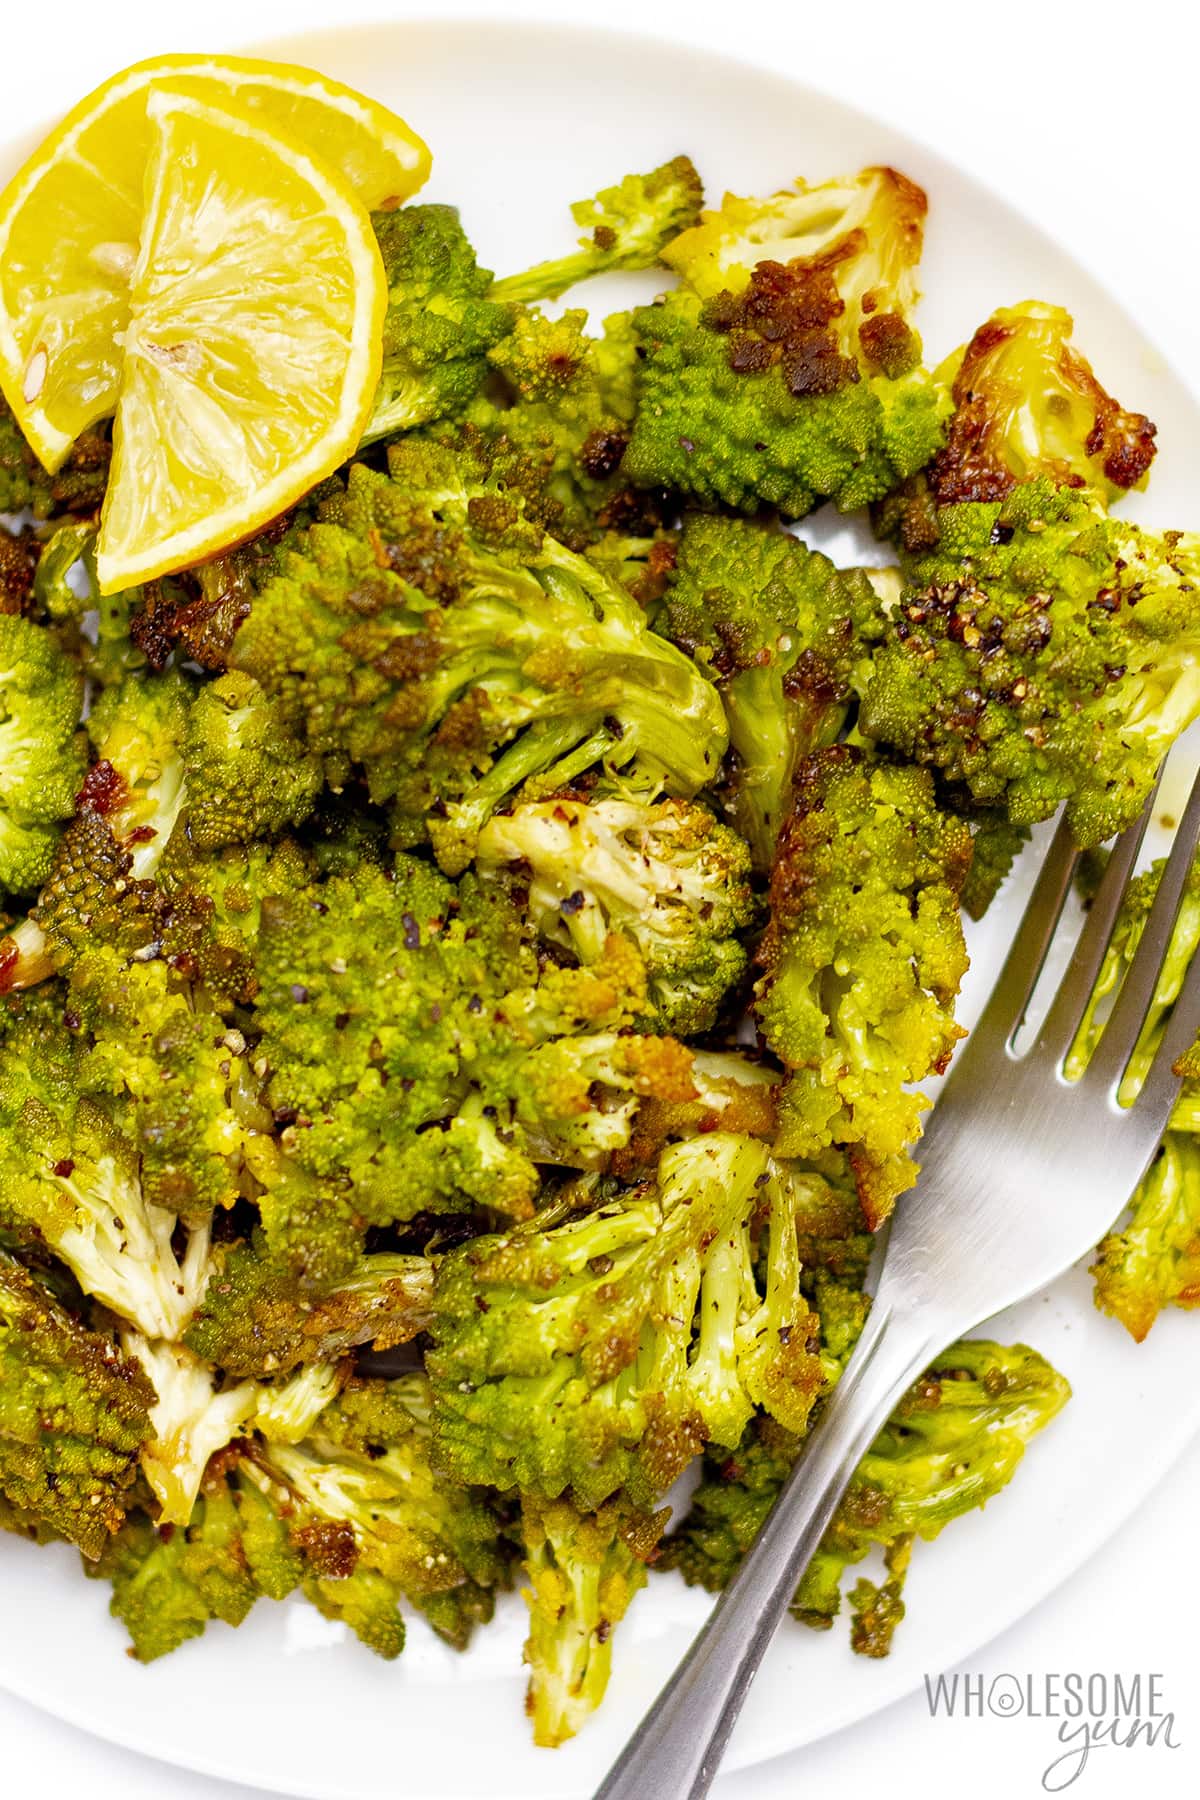 Roasted romanesco broccoli on a plate with lemon.